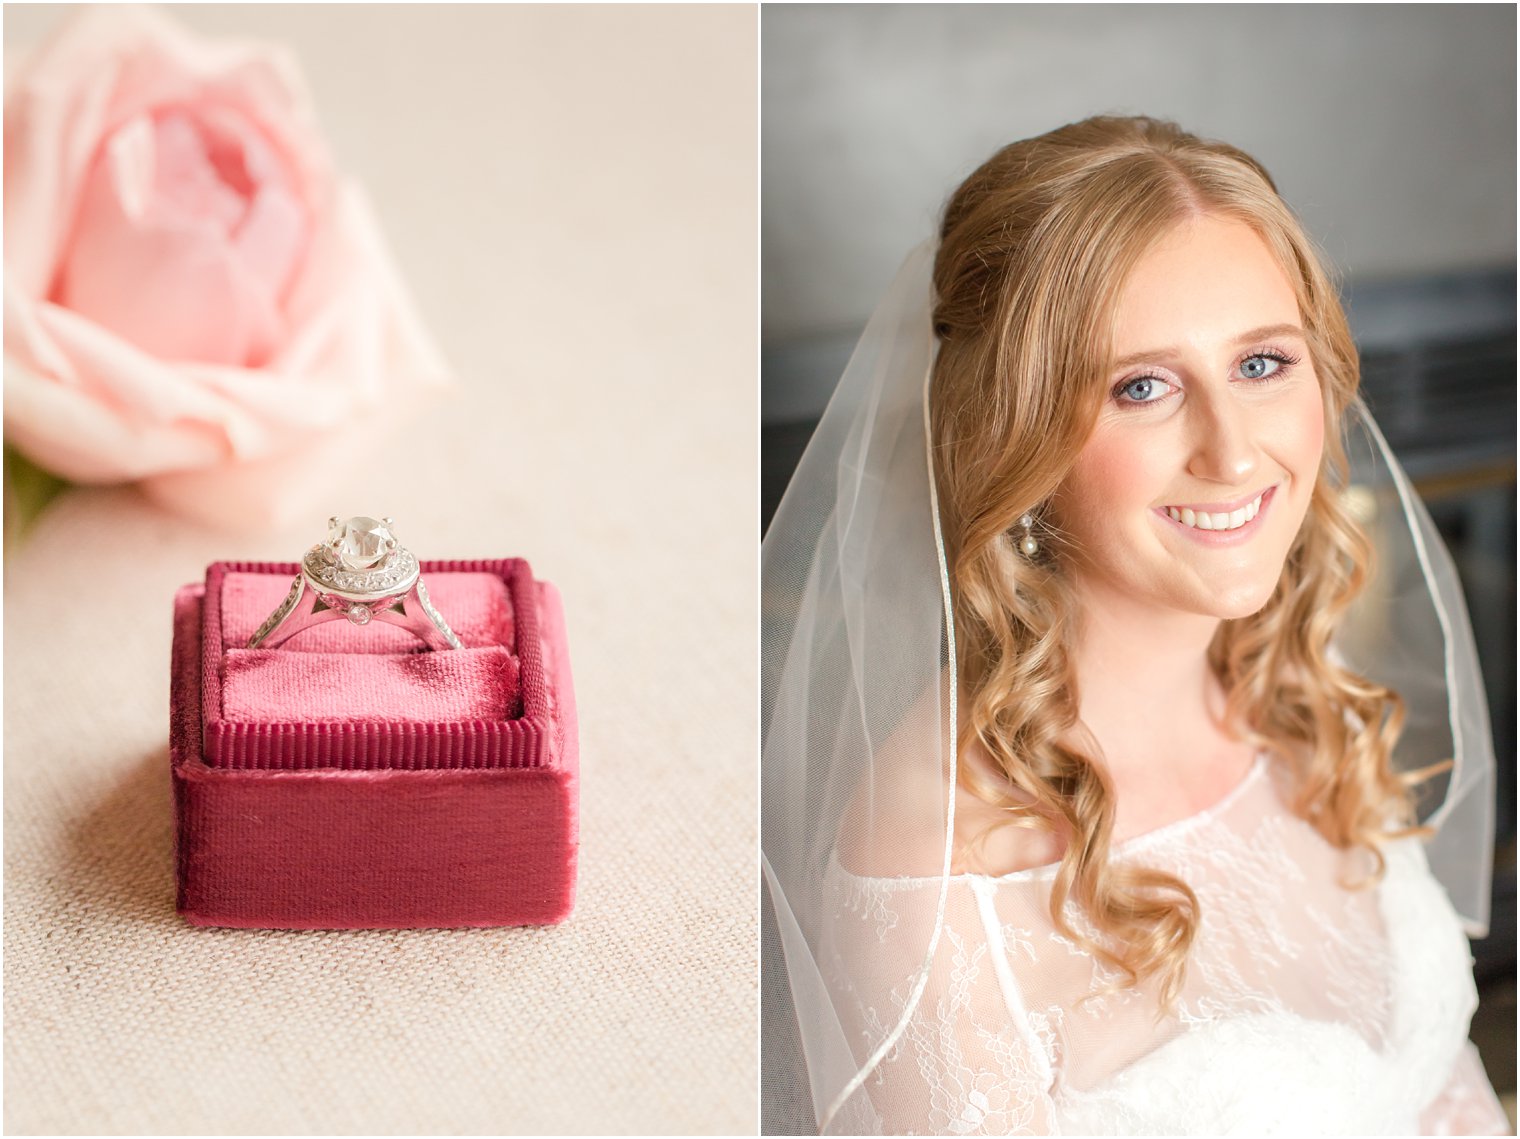 Engagement ring in halo setting | Lambertville Station Inn Wedding Photos by Idalia Photography